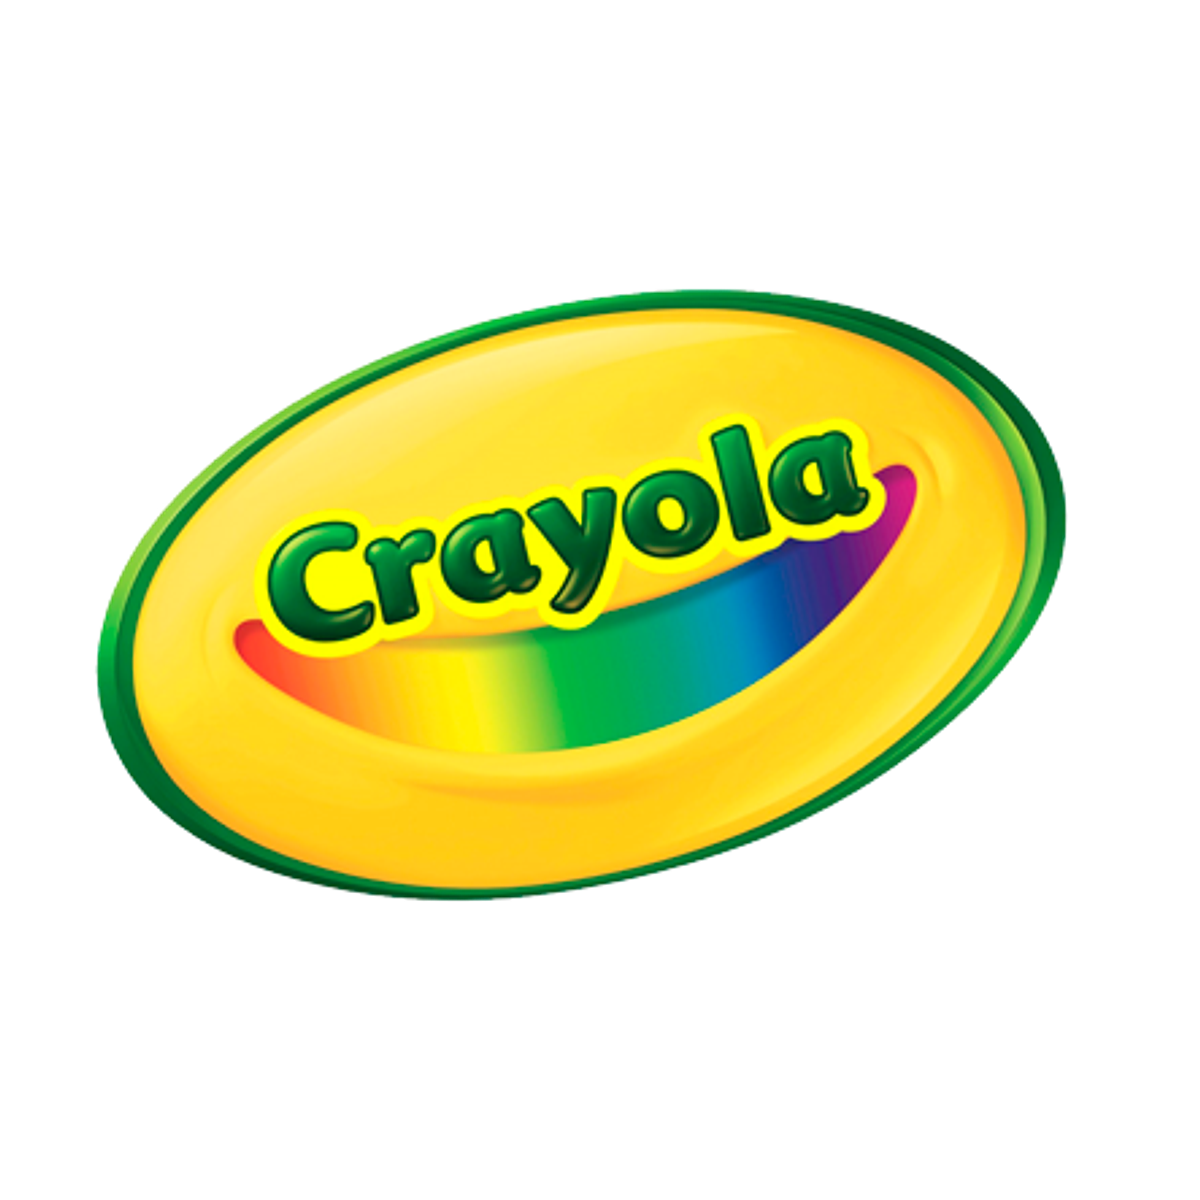 Crayola - Pokemon - Mala de pintura, Crayola